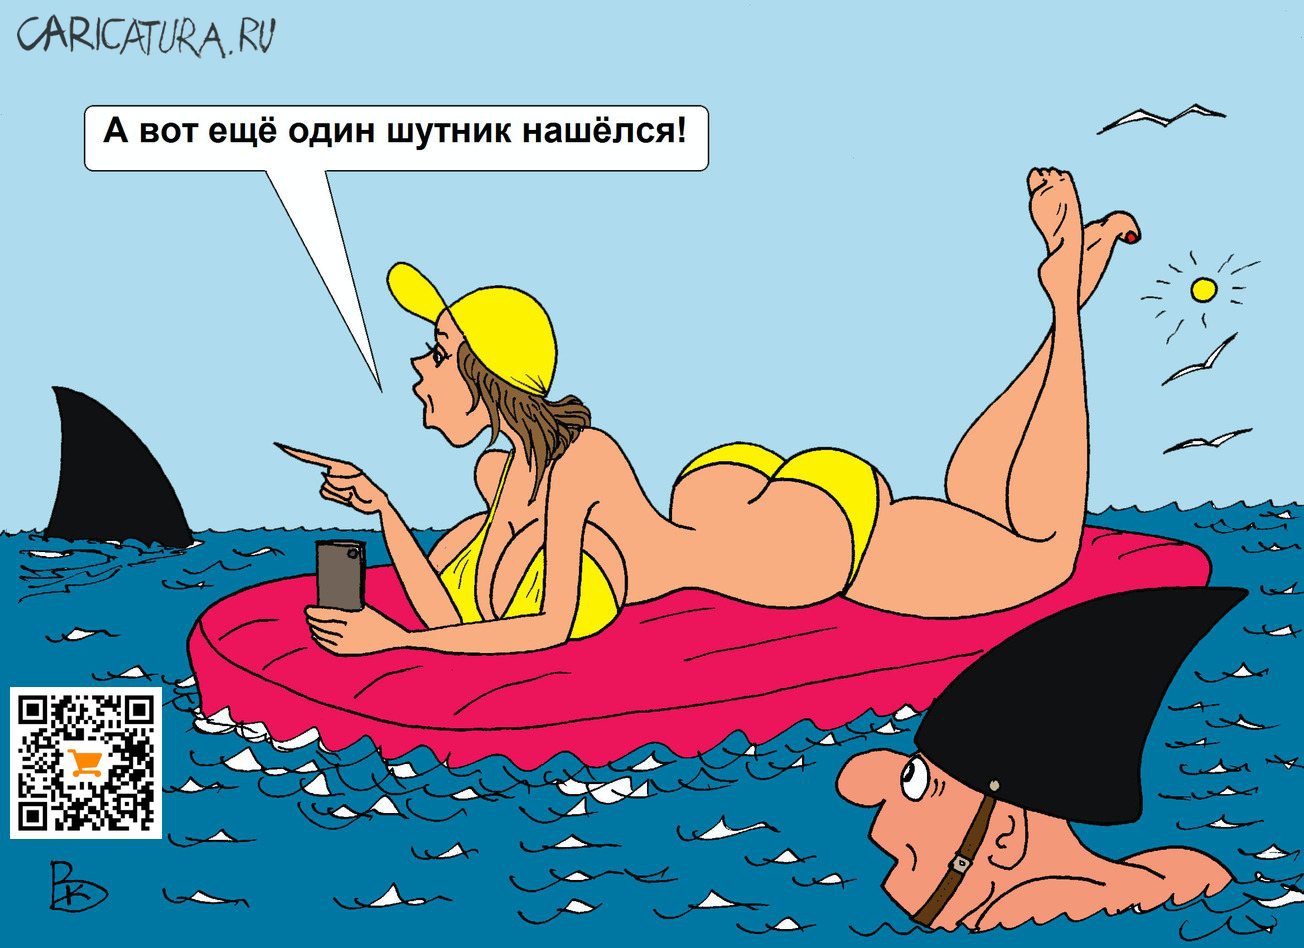 Карикатура "Шутник", Валерий Каненков